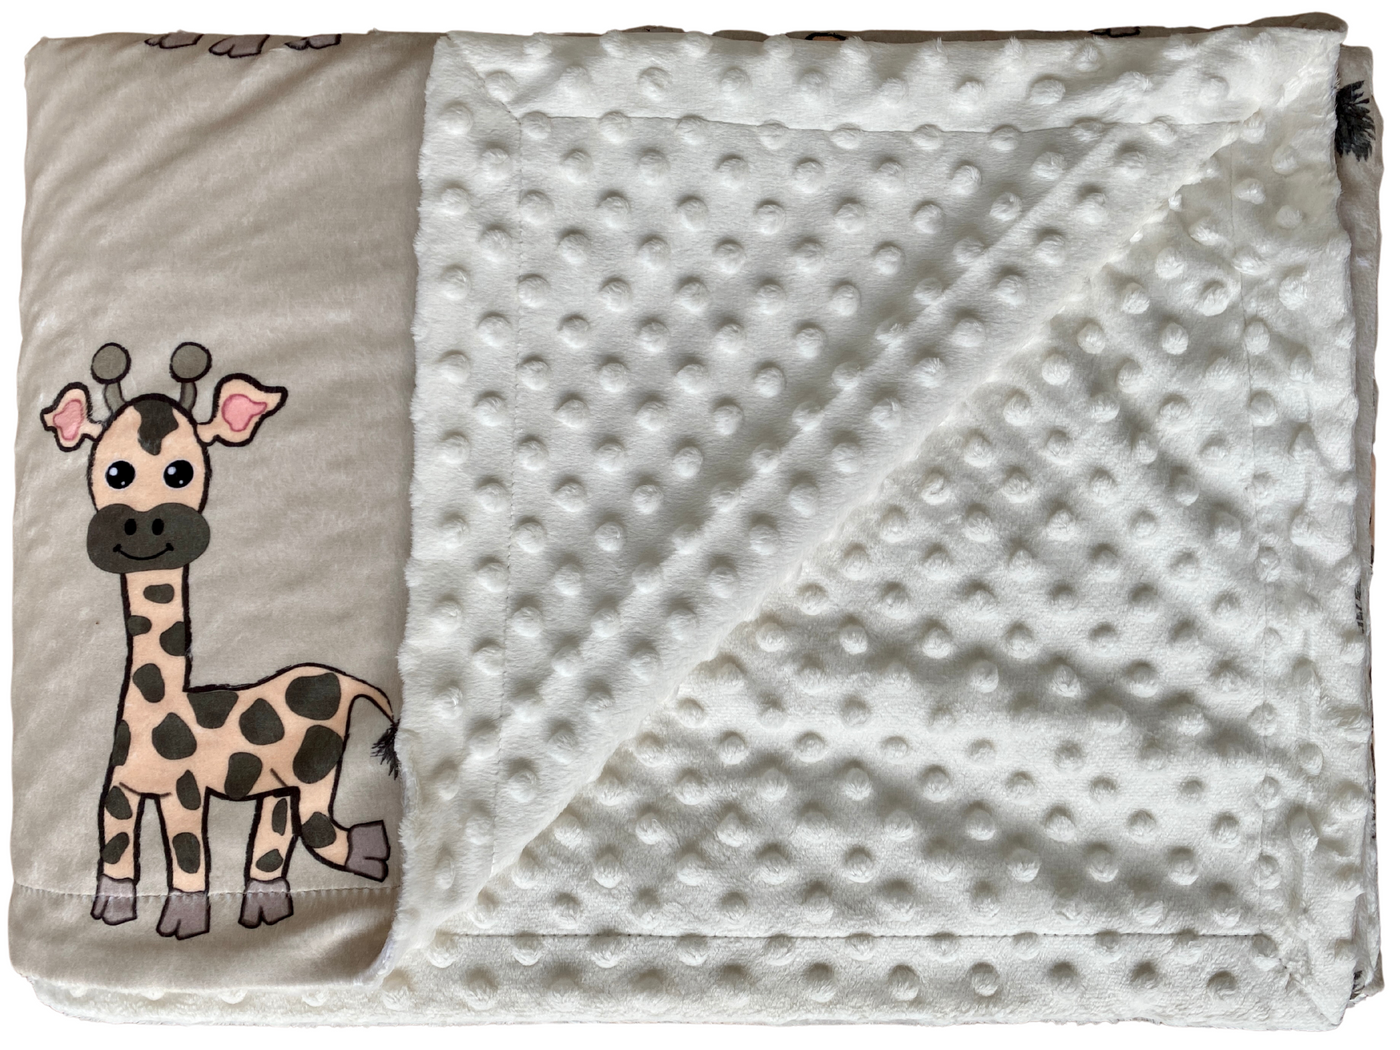 Baby blanket: The Laughing Giraffes